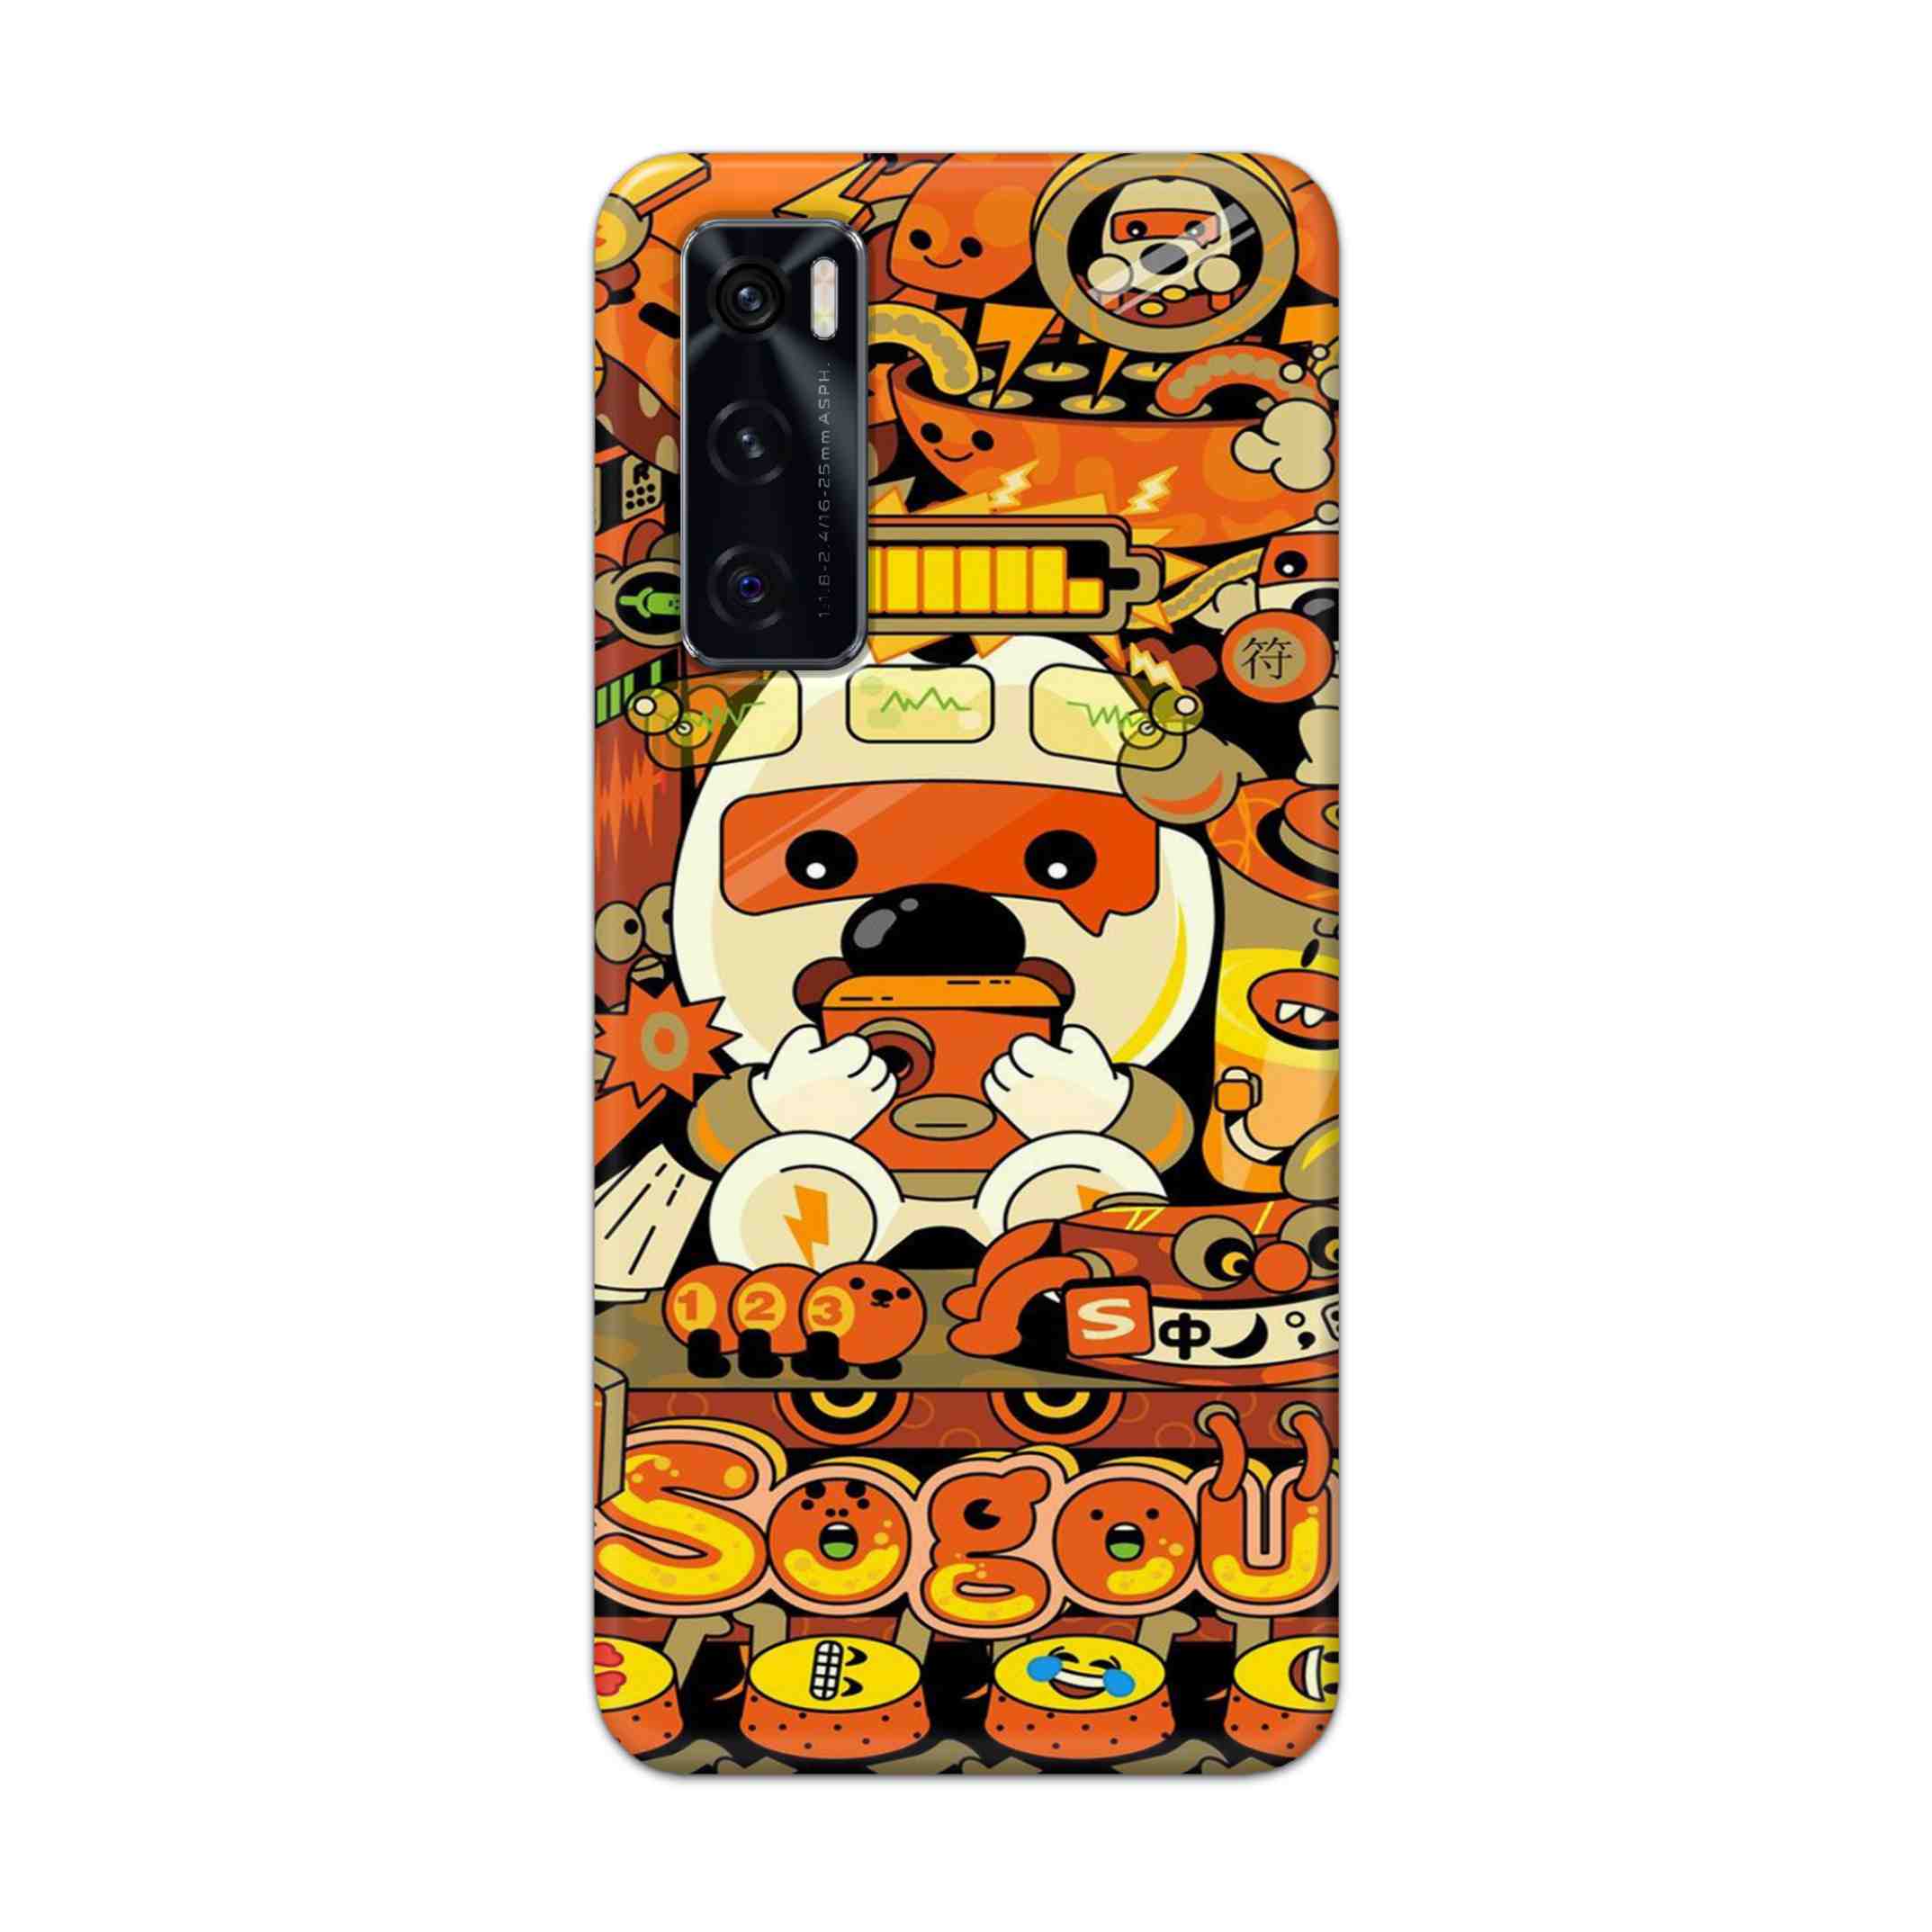 Buy Sogou Hard Back Mobile Phone Case Cover For Vivo V20 SE Online